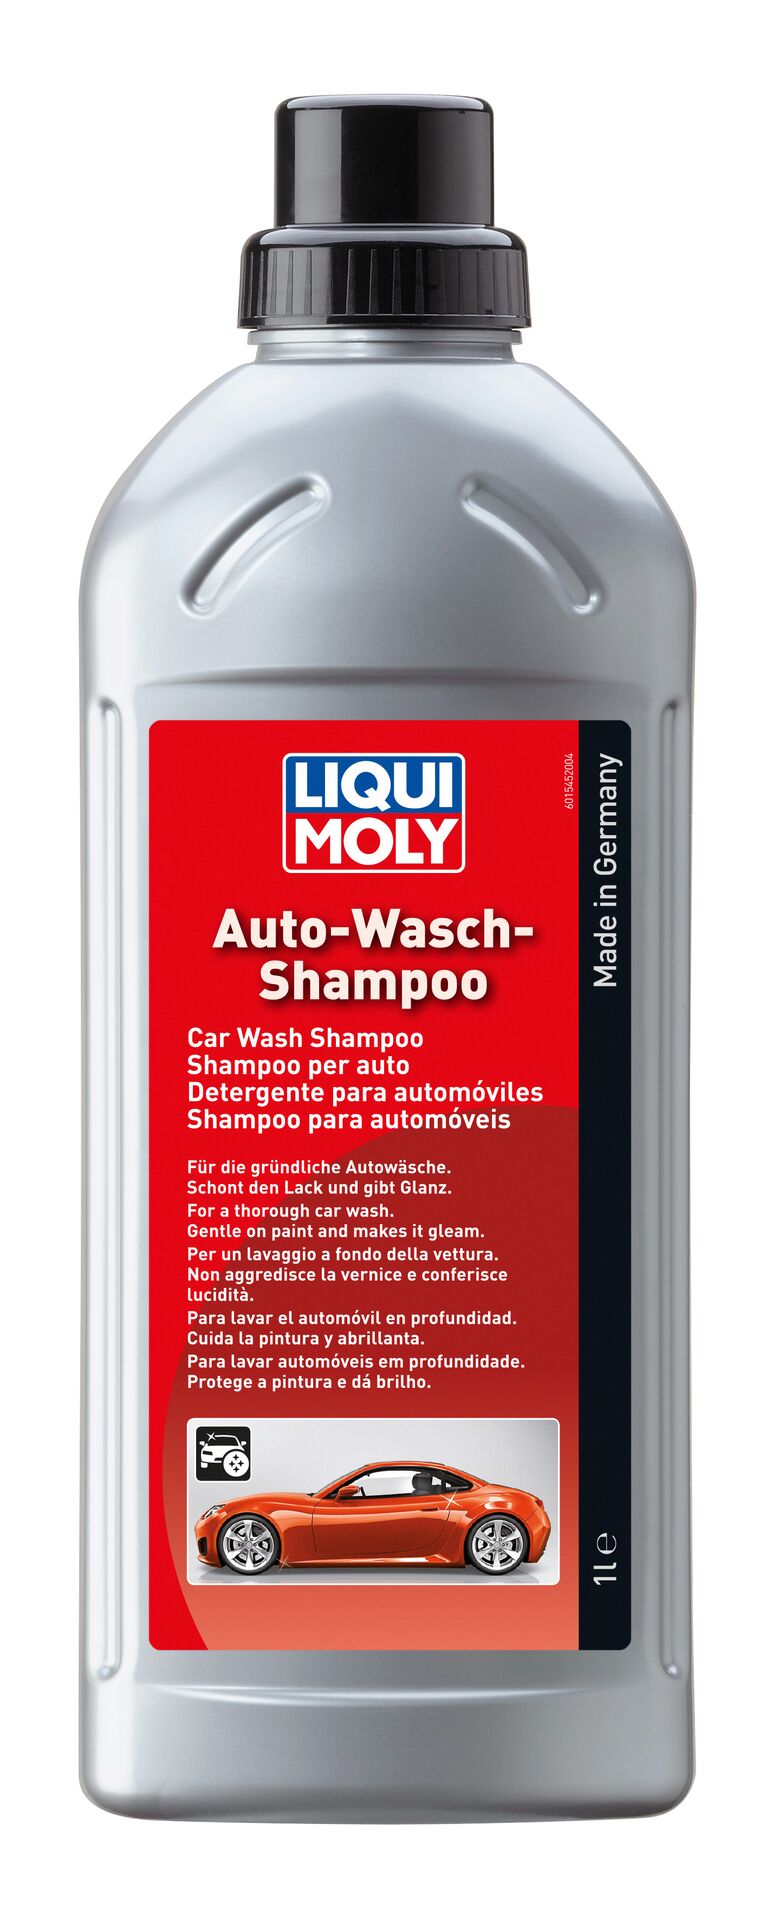 LIQUI MOLY Auto-Wasch-Shampoo Car-Wash-Shampoo Flasche 1545 Kunststoff 1 l